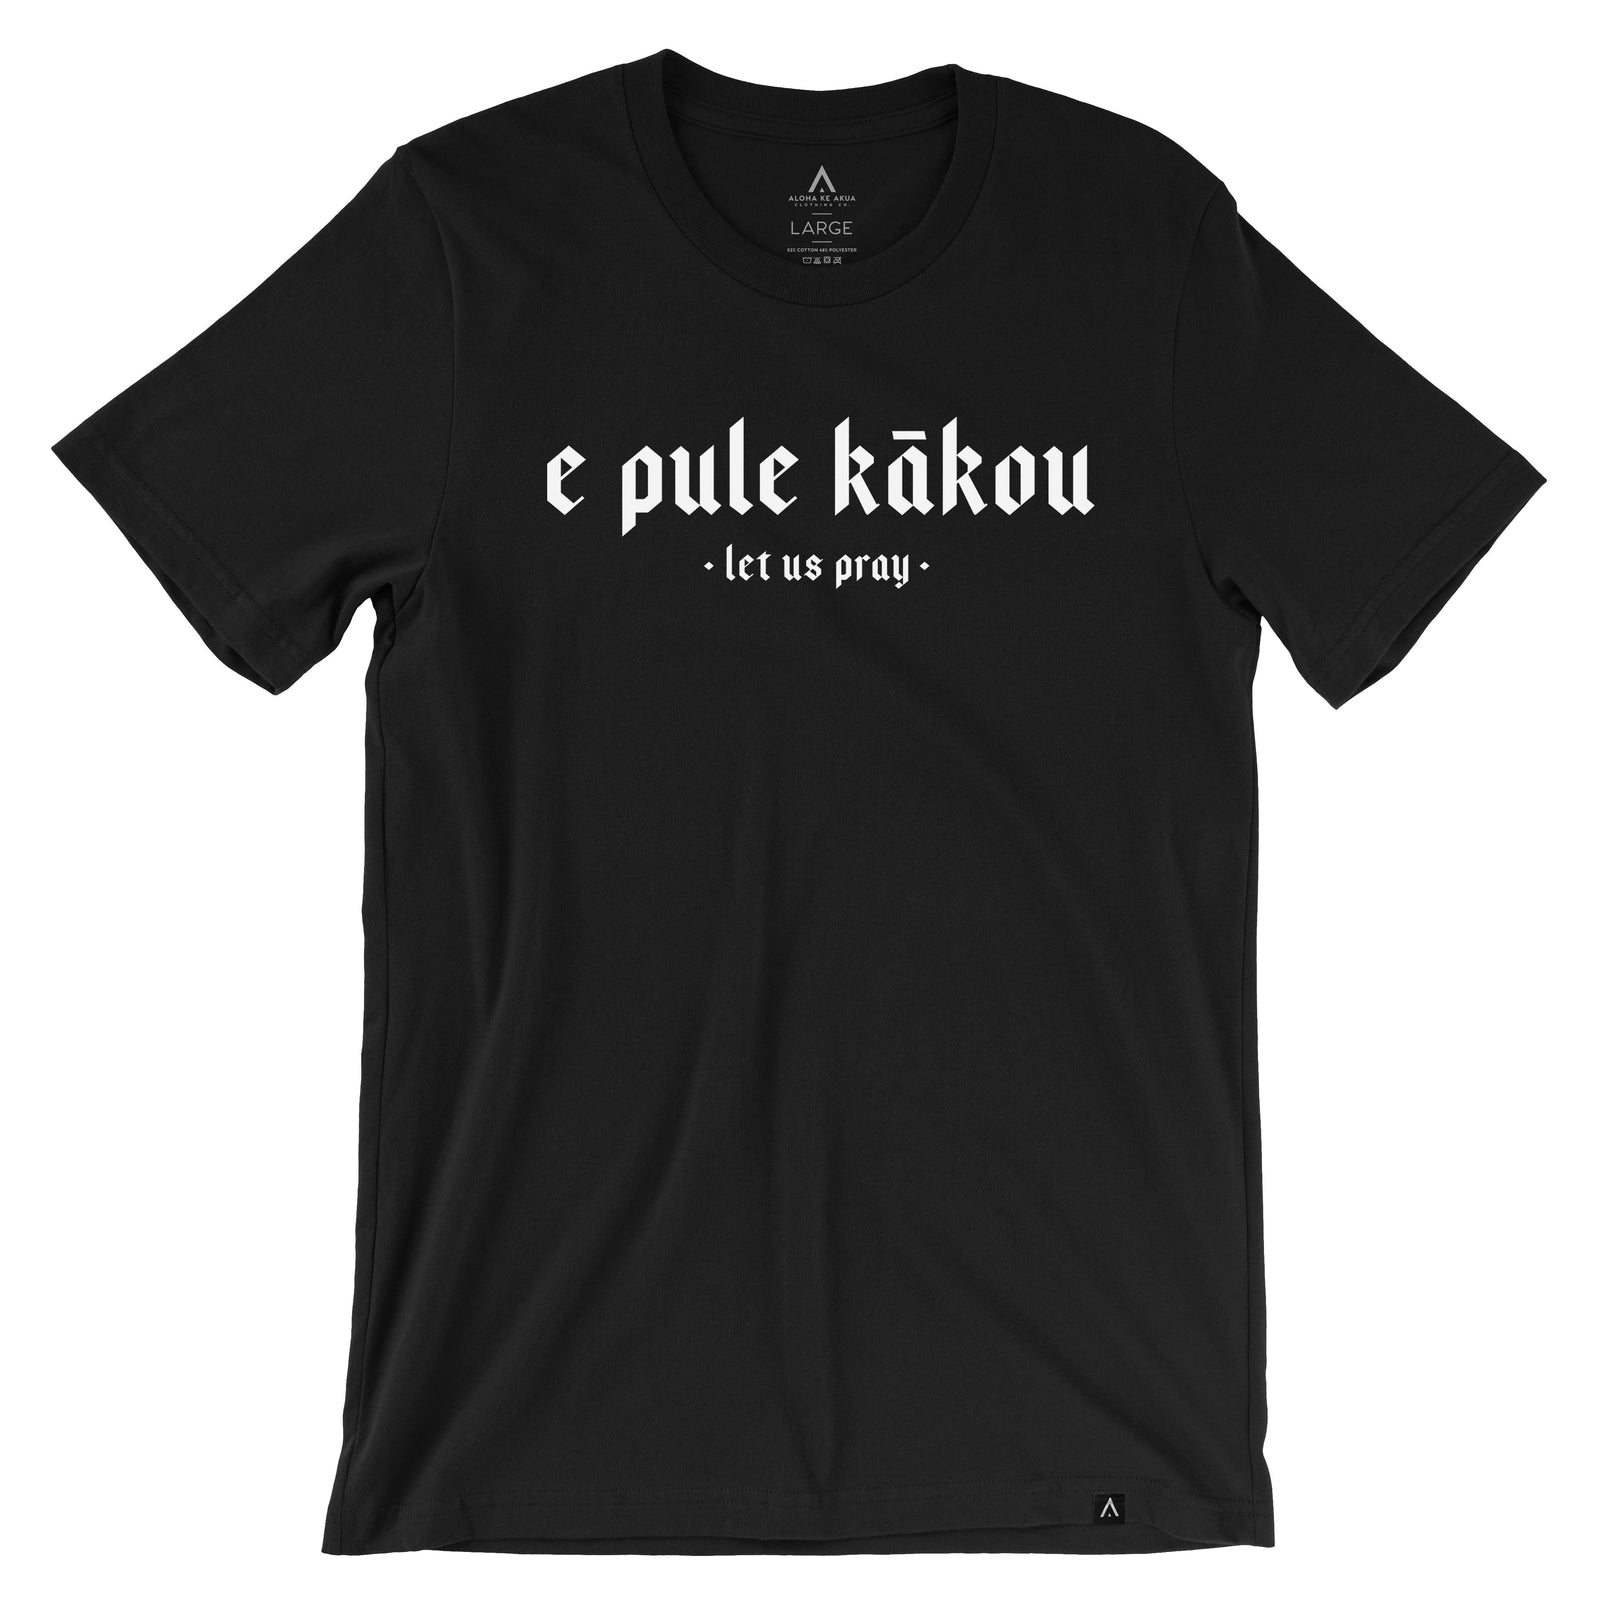 Pop-Up Mākeke - Aloha Ke Akua Clothing - E Pule Kākou 2.0 Men's Short Sleeve T-Shirt - Black